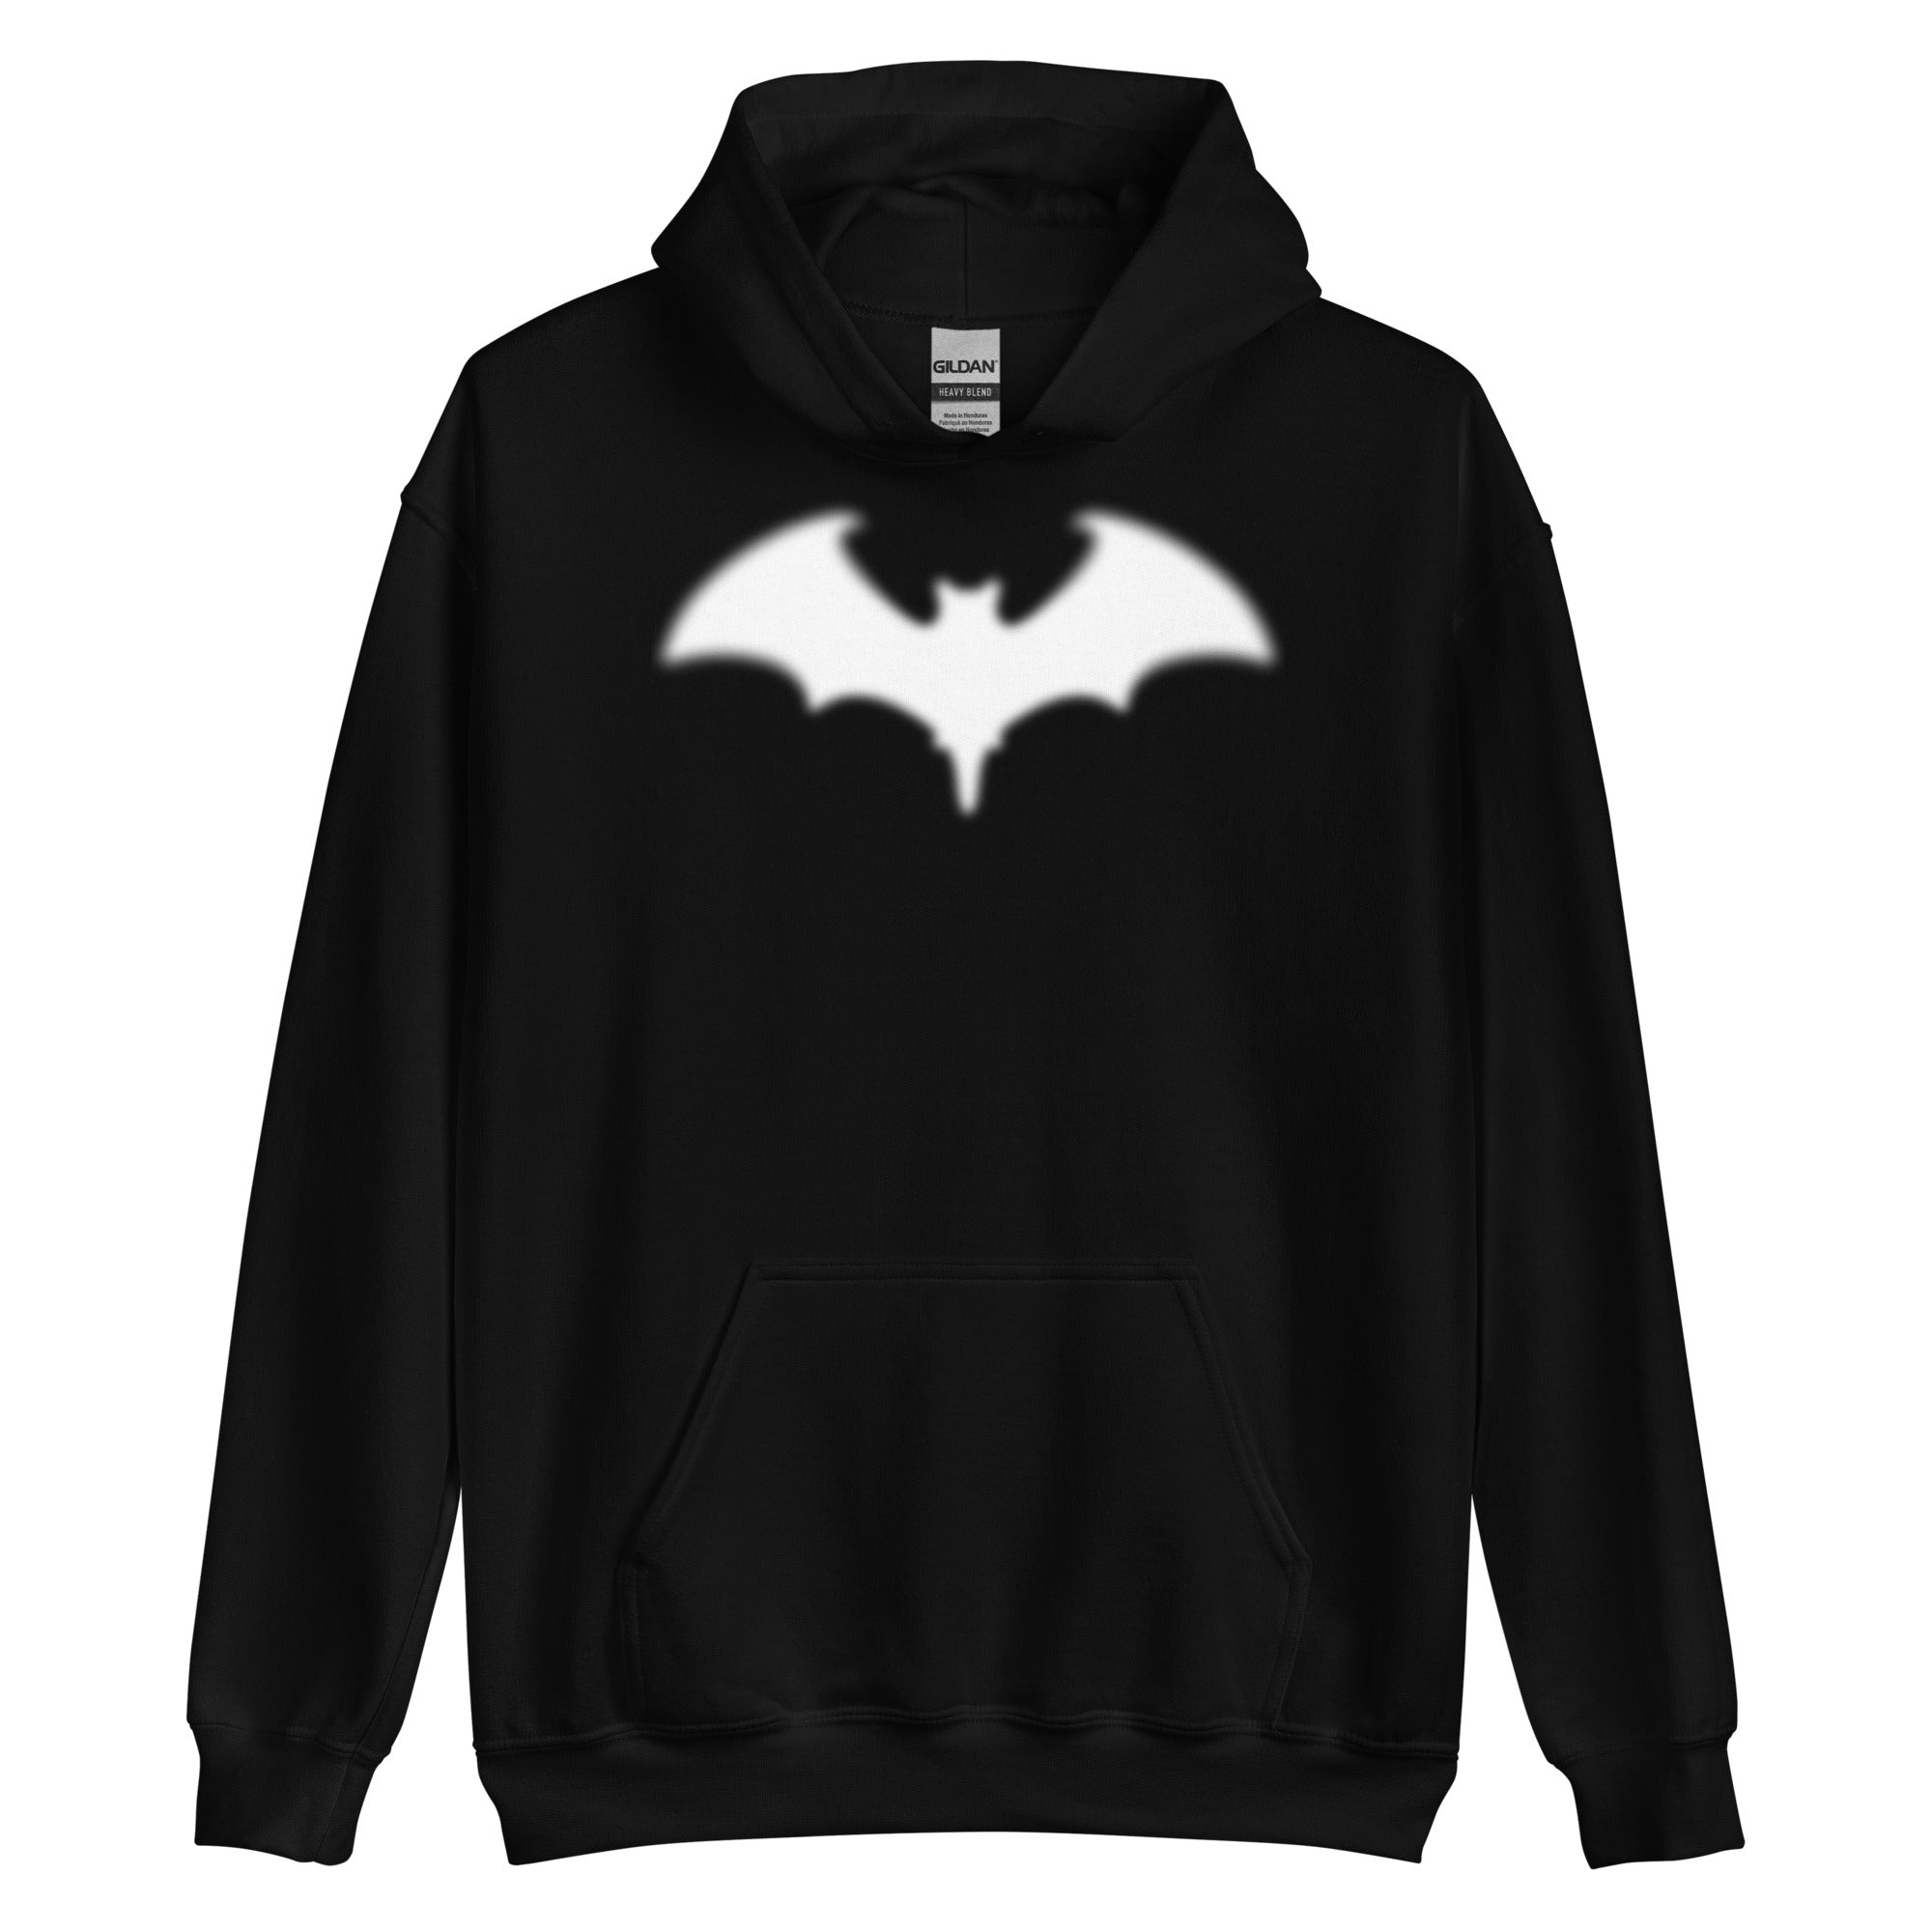 Blurry Bat Halloween Goth Women's Hoodie Sweatshirt - Edge of Life Designs